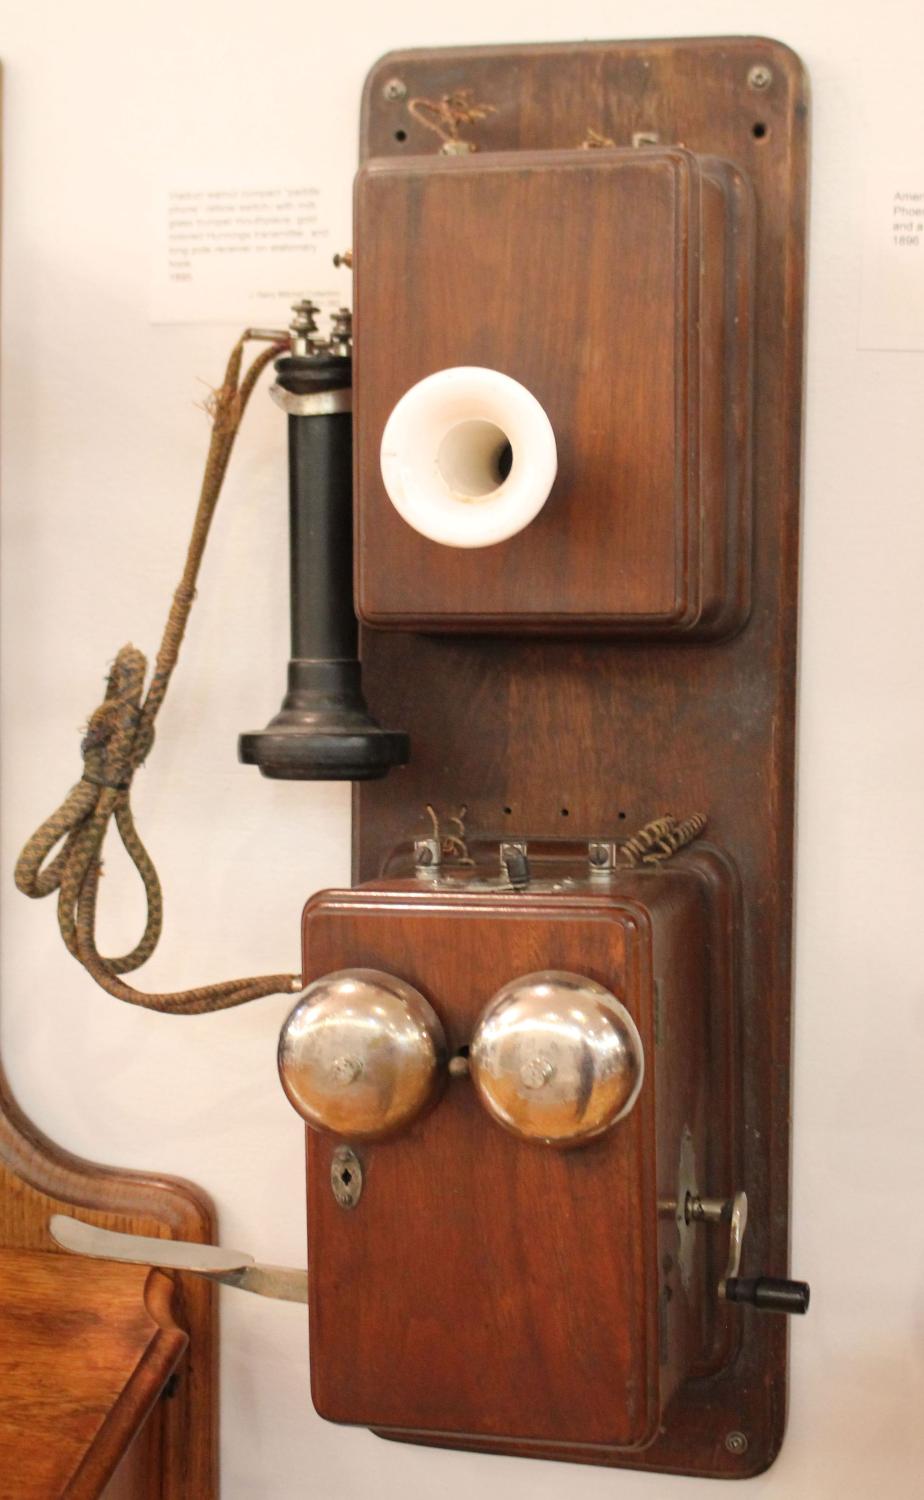 New Hampshire Telephone Museum - Viaduct Telephone